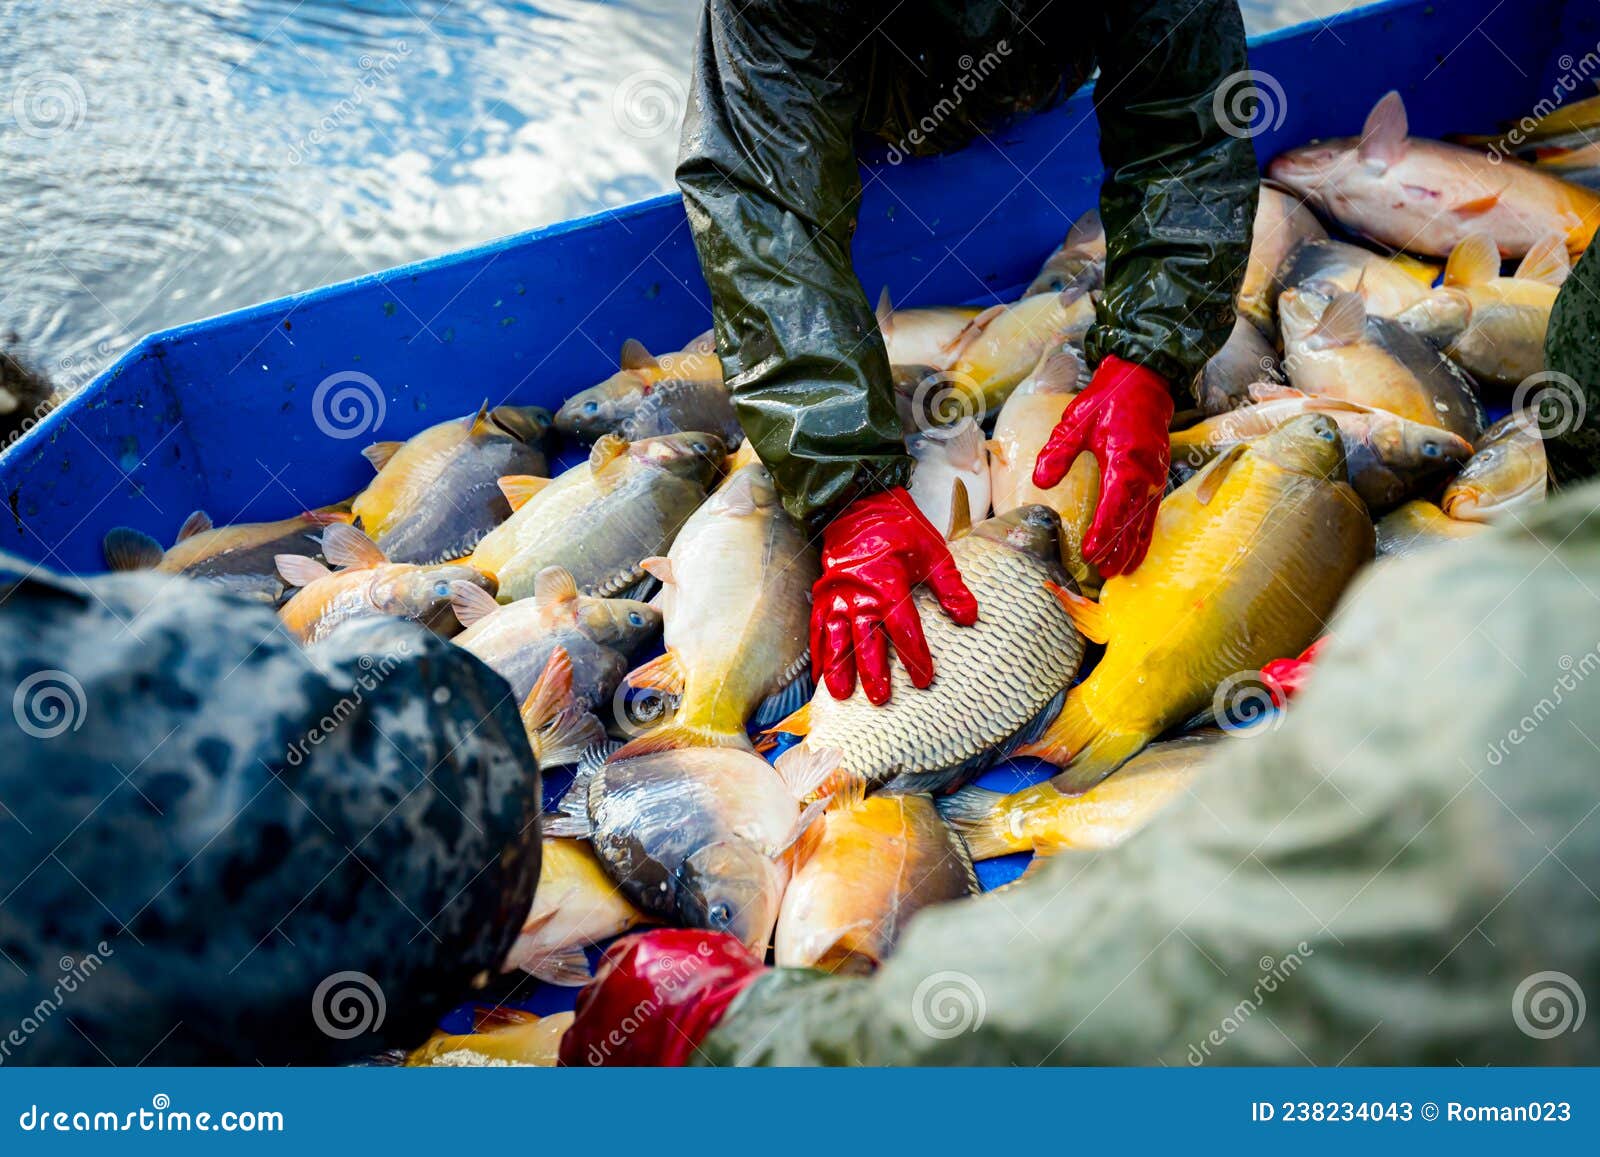 Fishermen in Waterproof Overalls Sorting Fish from Fishpond